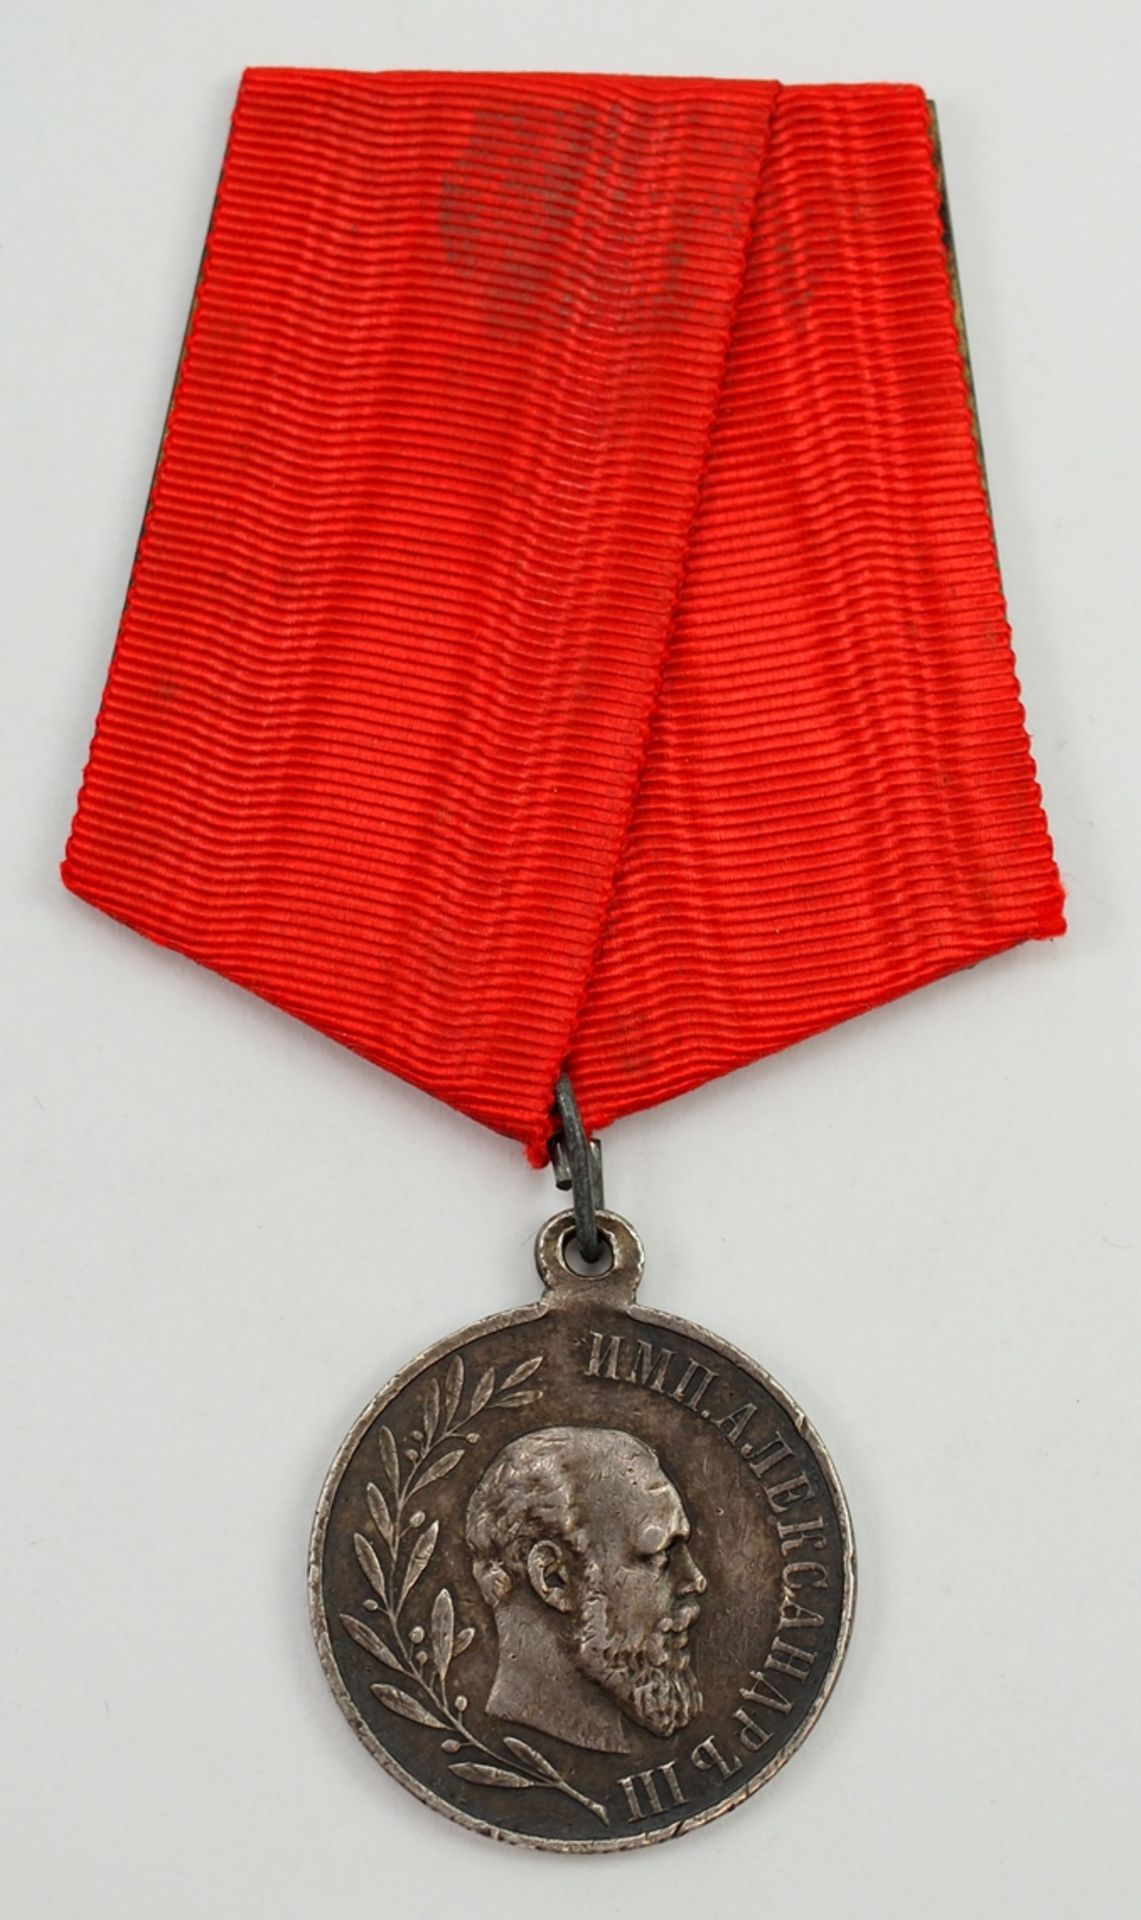 Russland: Medaille Alexander III. - 1881/1894. 